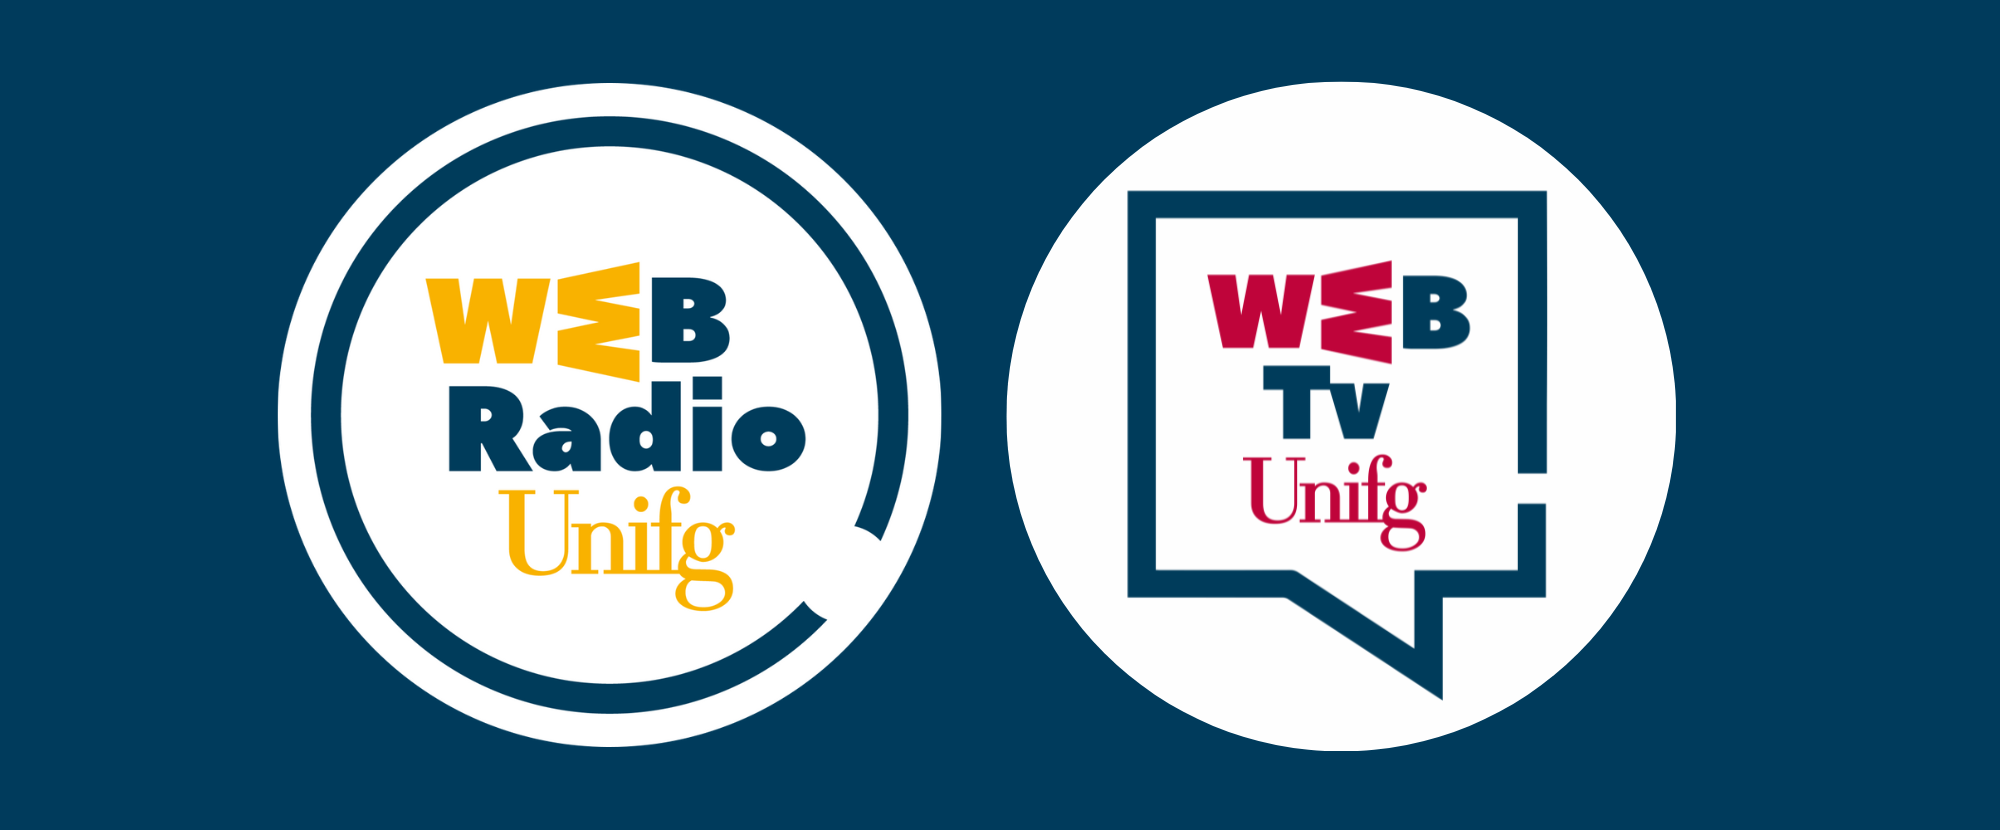 Web radio e web TV